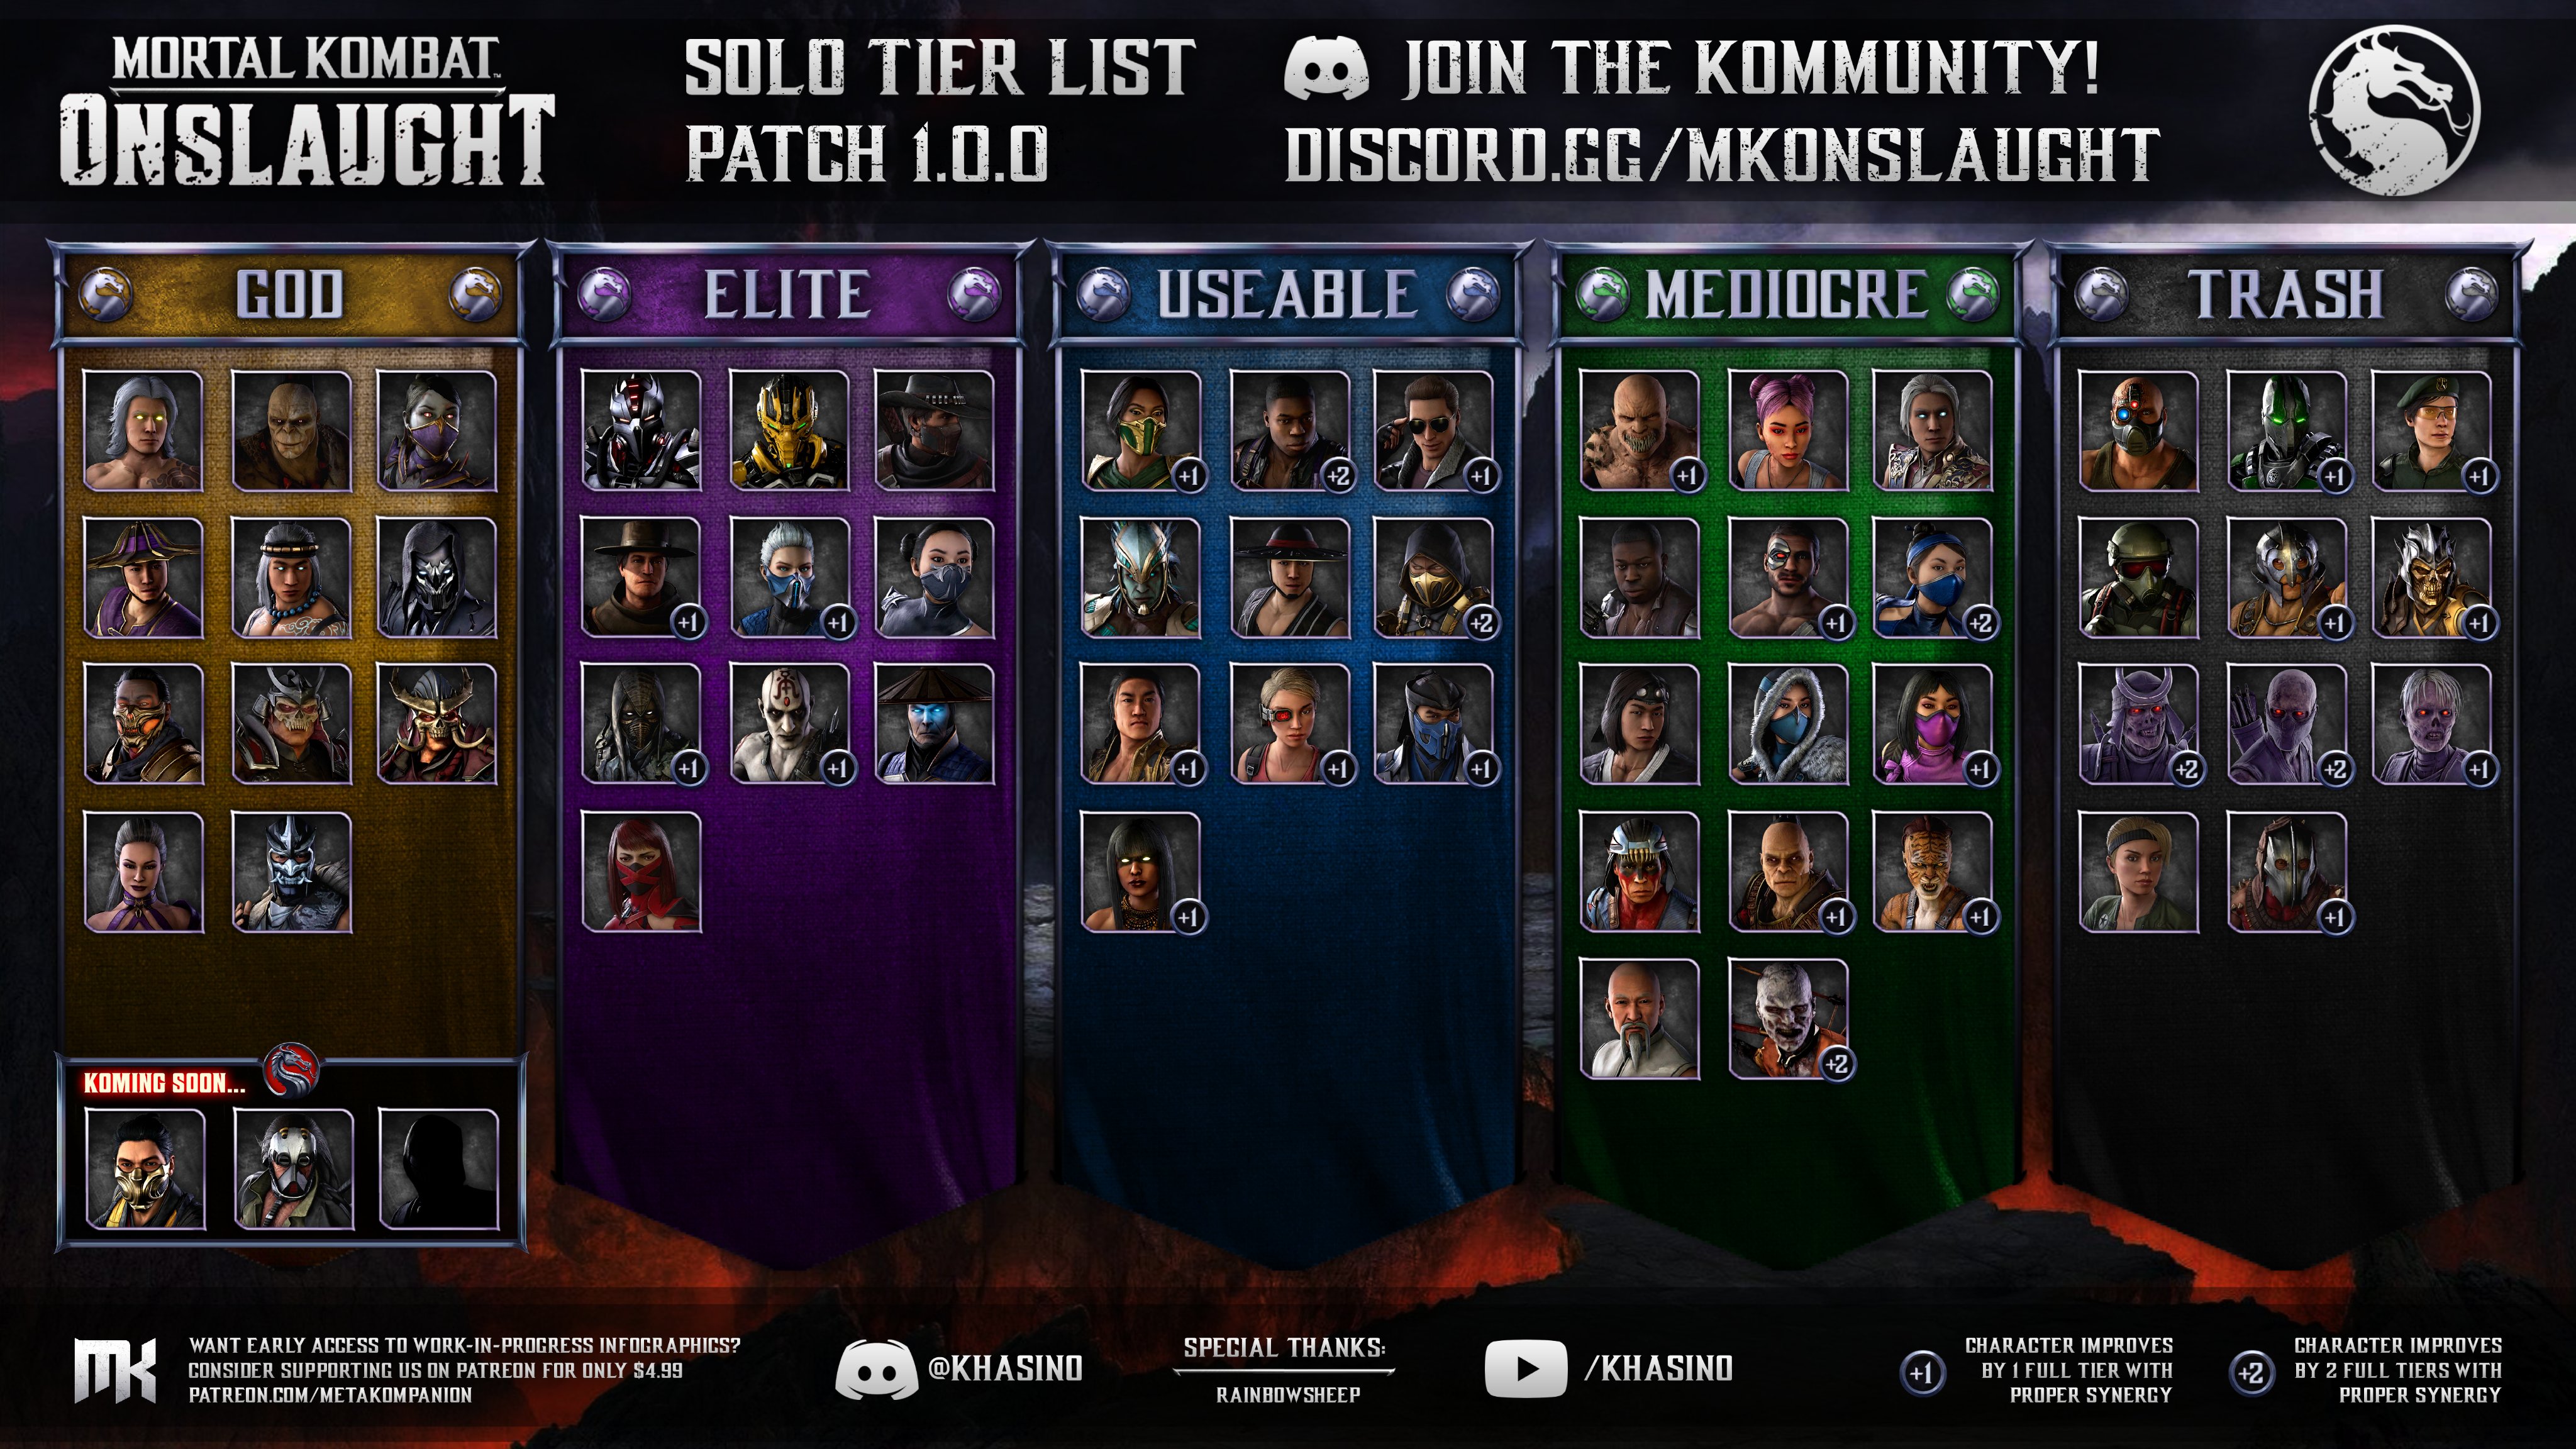 Mortal Kombat Onslaught tier list